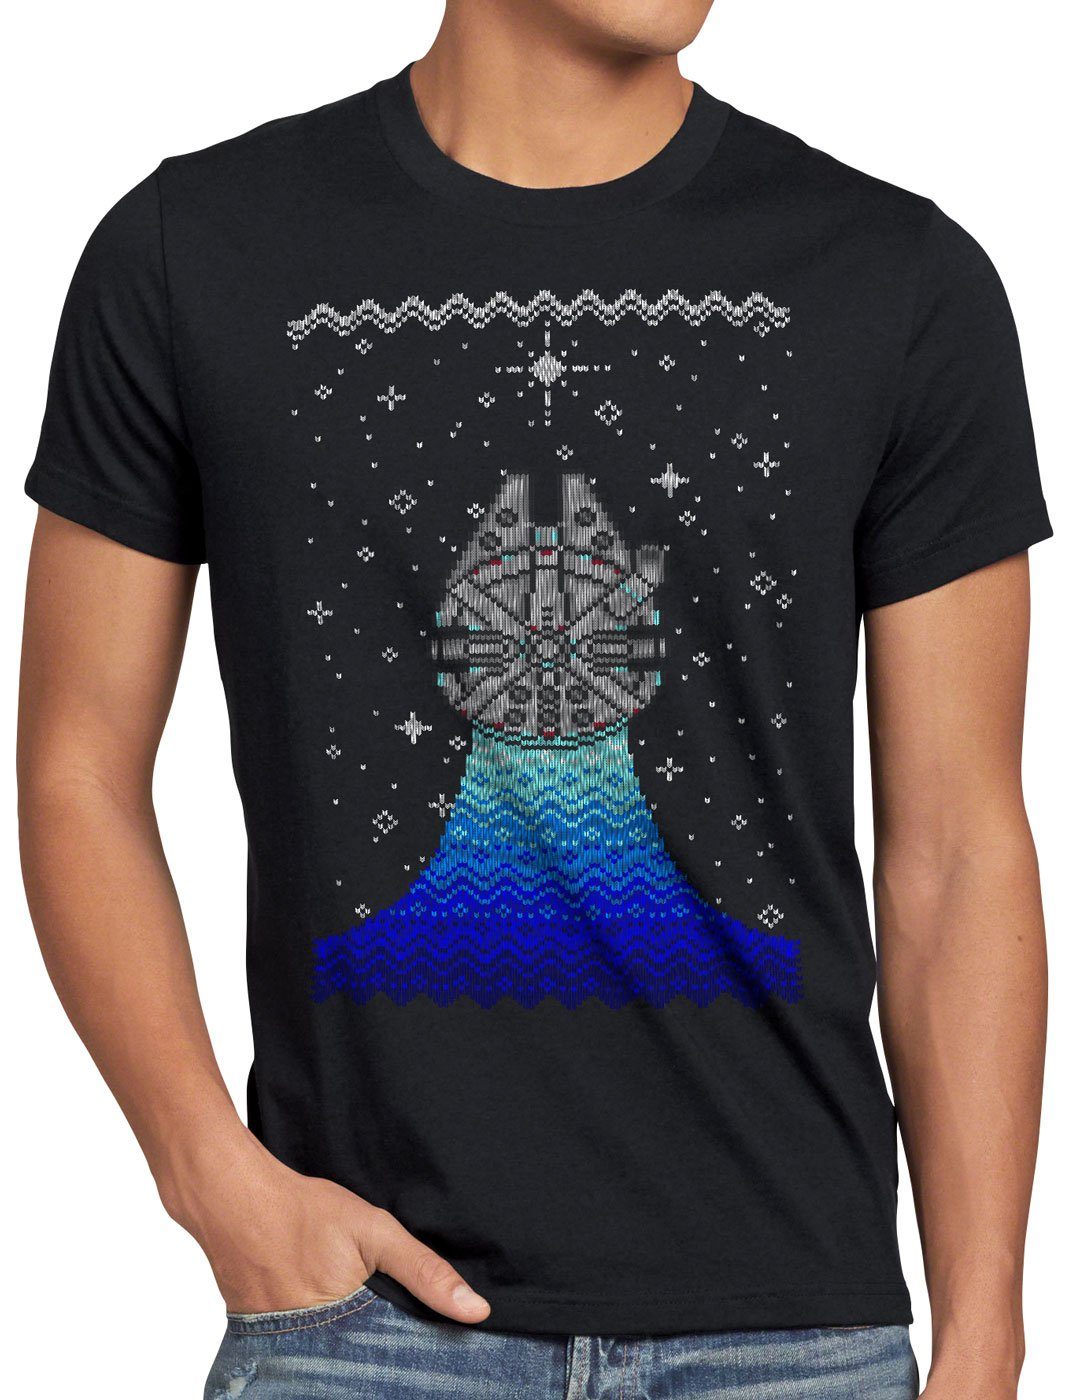 x-mas rasender Sweater Wars T-Shirt Strick Ugly falke weihnachtsbaum style3 pulli Herren Print-Shirt